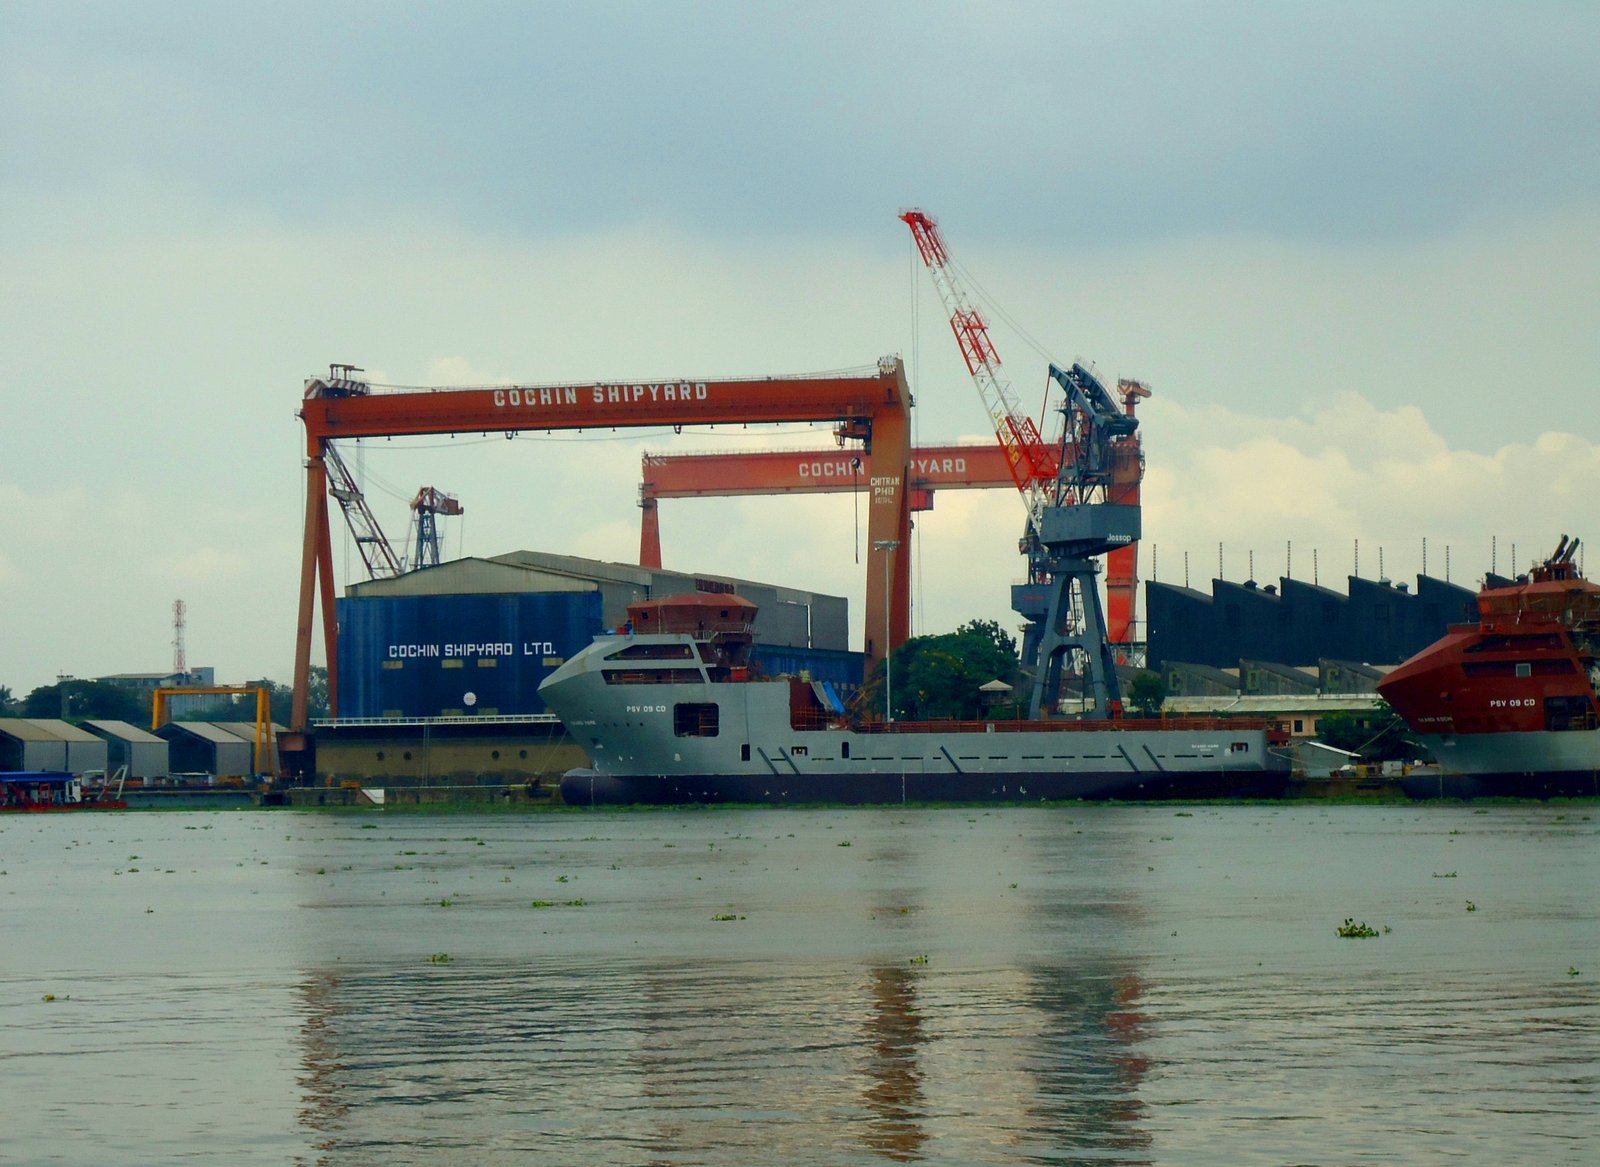 Cochin Shipyard Apprentice Online Form 2020 |Cochin Shipyard Ltd Technician, Trade Apprentice Online| Cochin Shipyard Ltd. Recruitment 2020